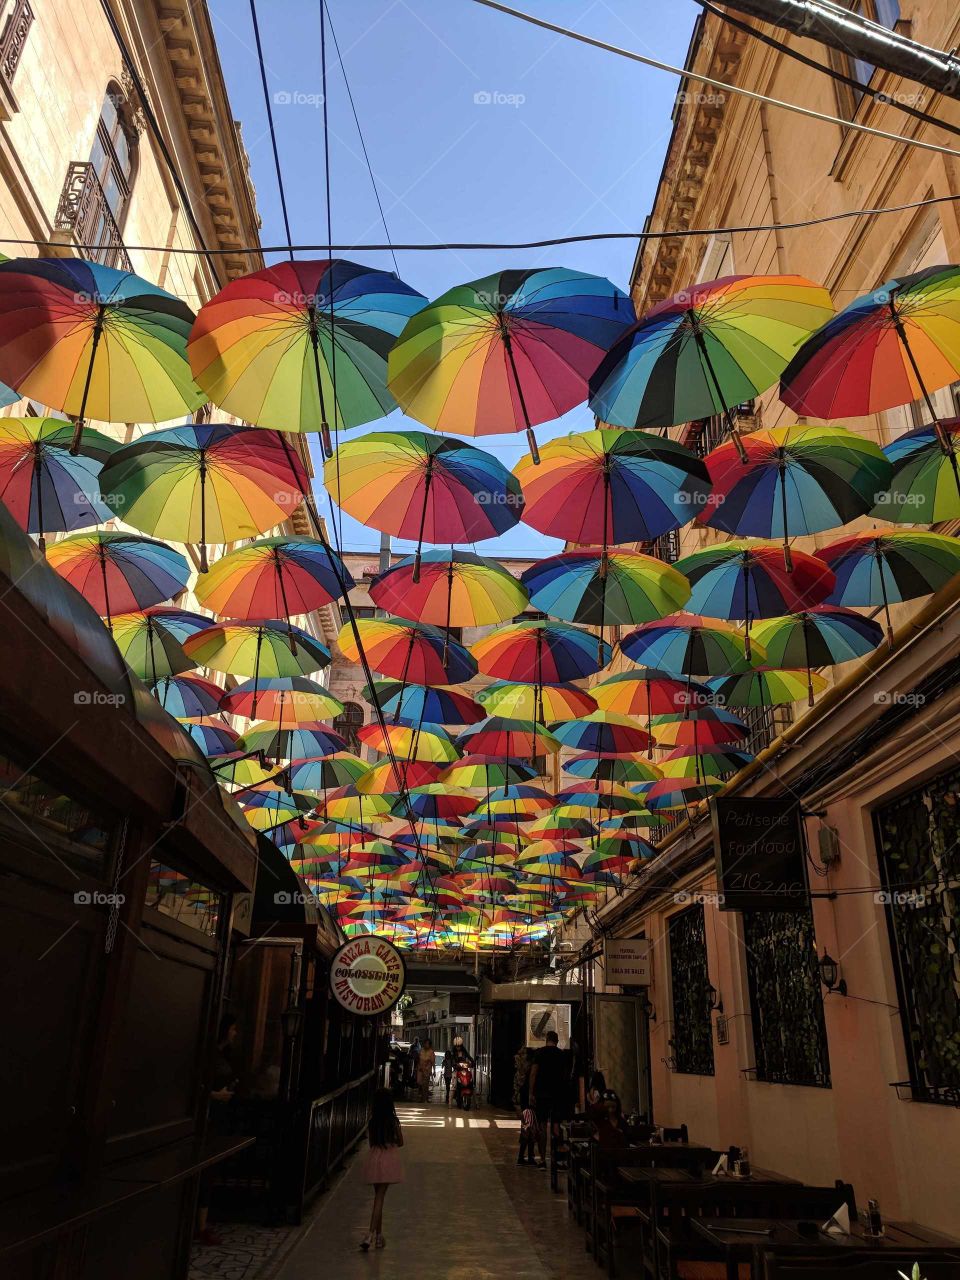 rainbow umbrellas in the streets of Romania